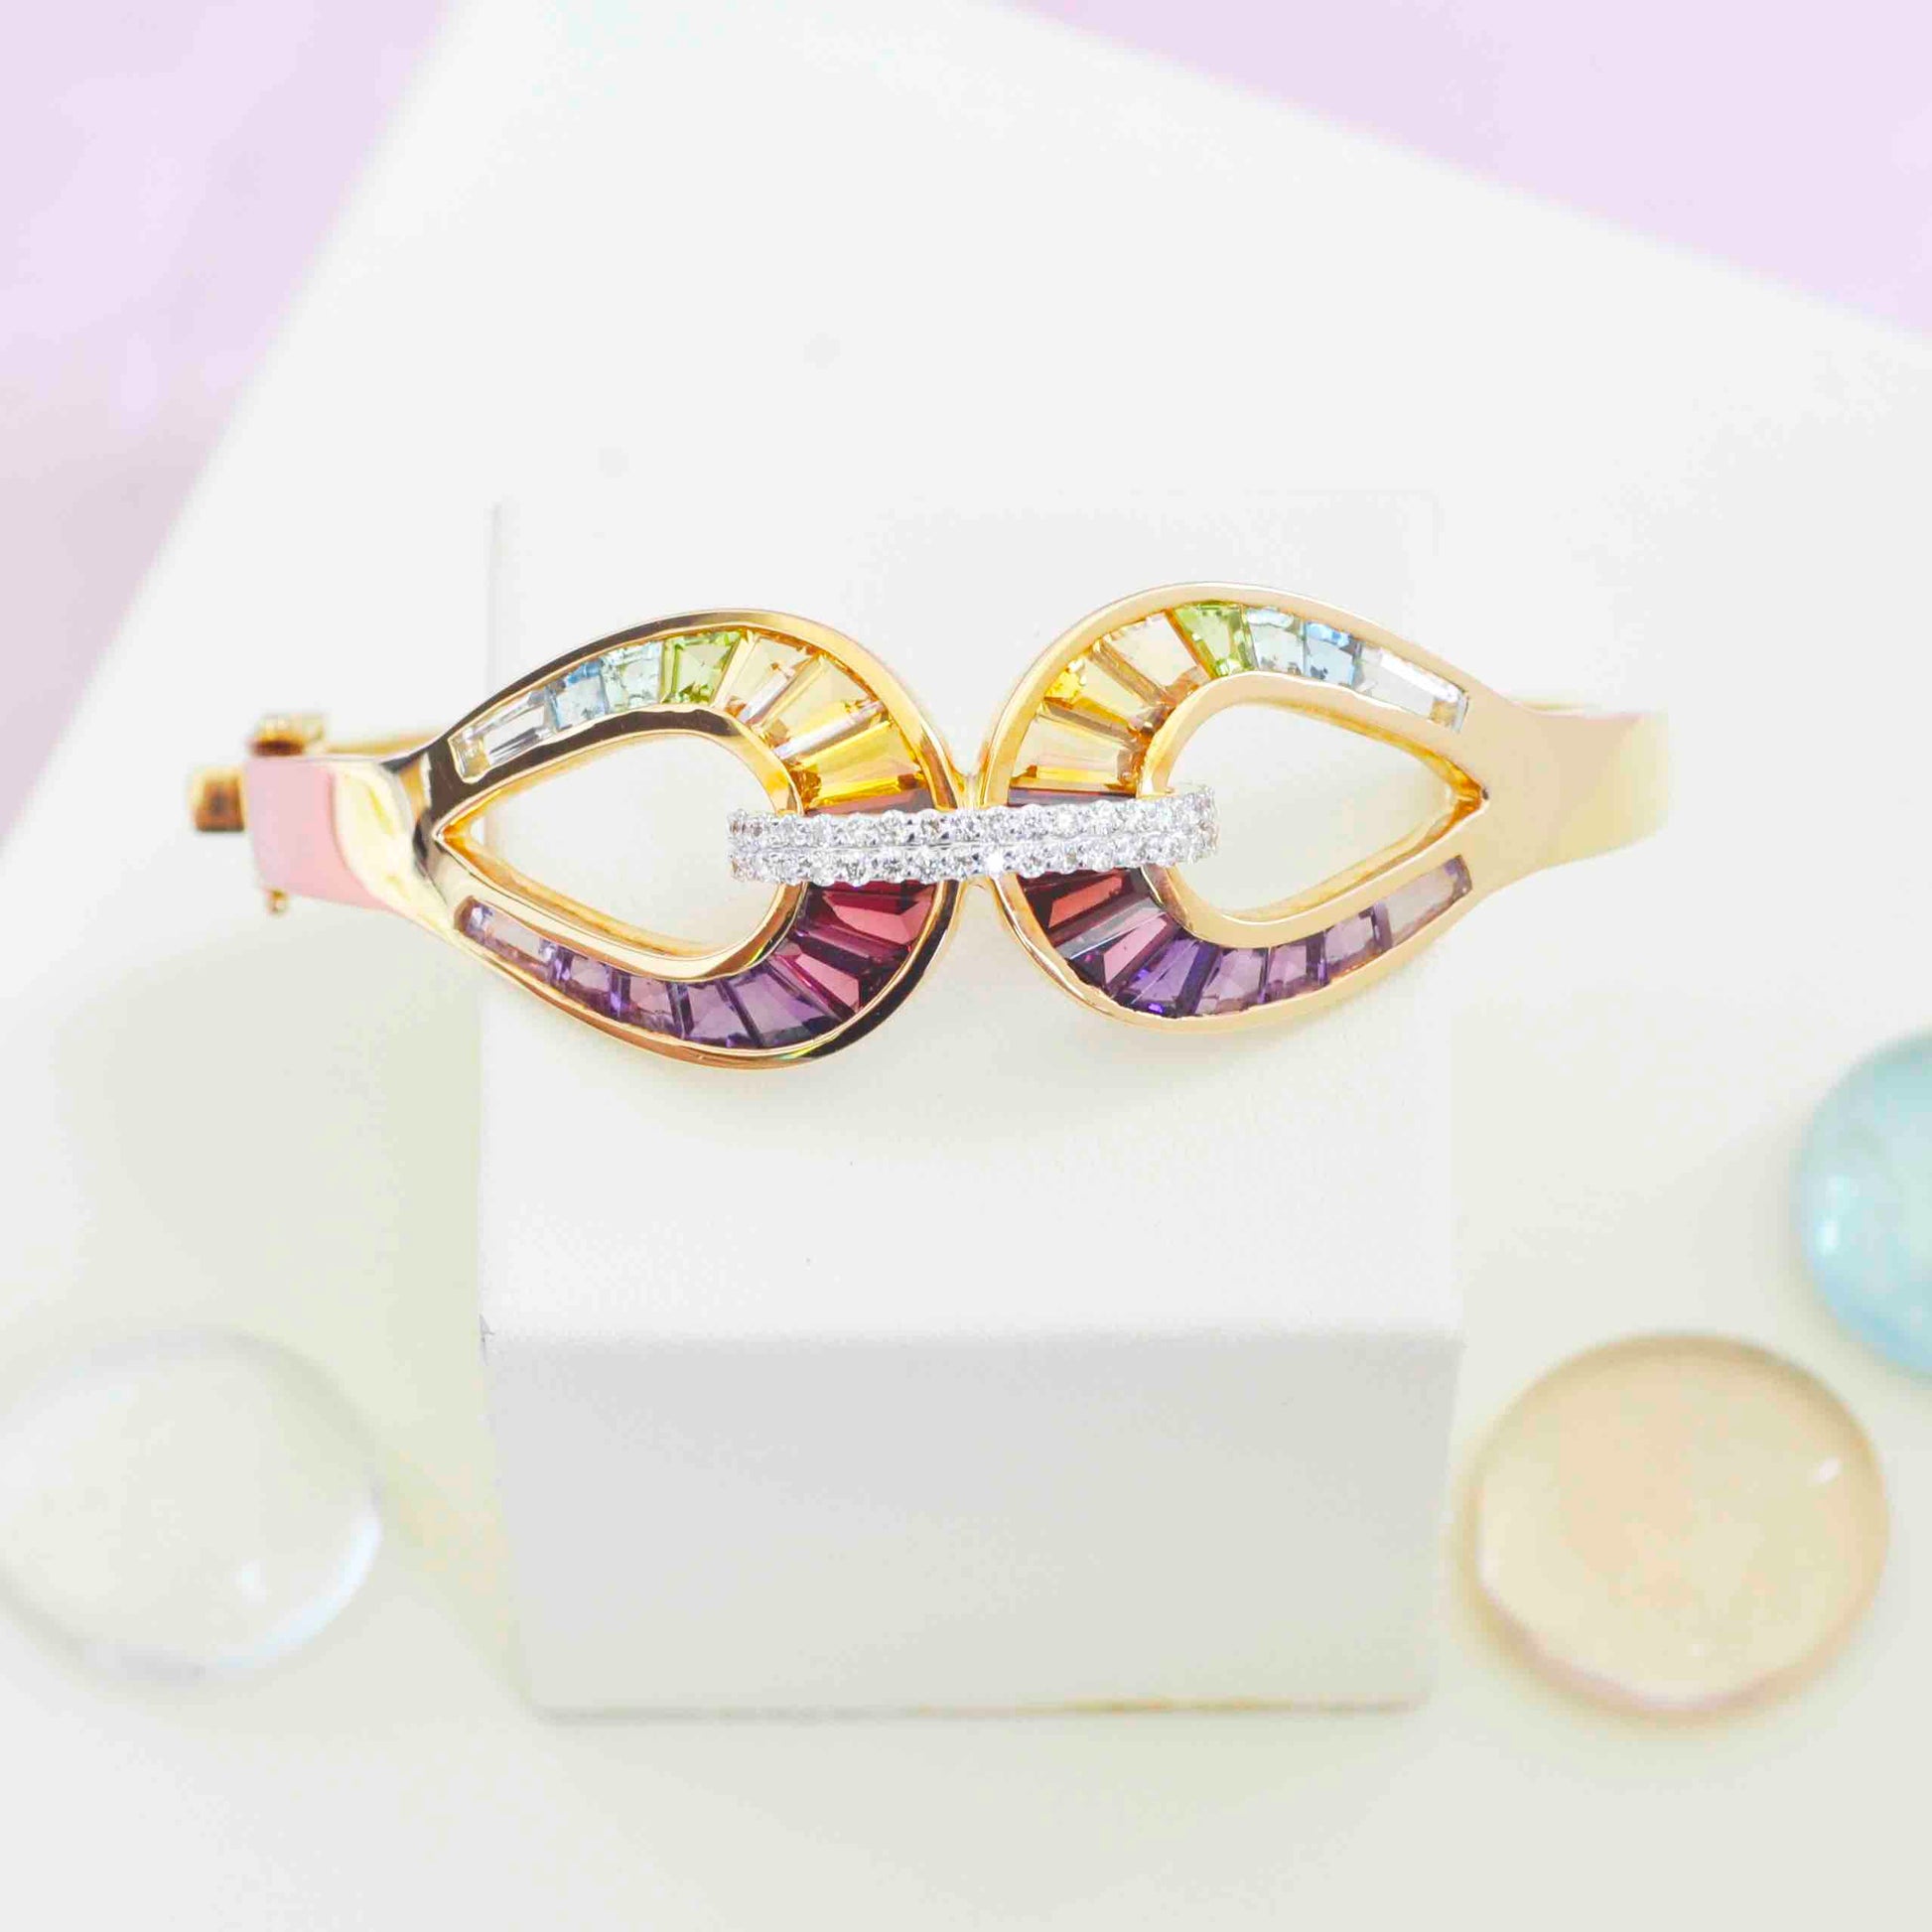 18K Gold Rainbow Gemstones Diamond Raindrop Bracelet - Vaibhav Dhadda Jewelry